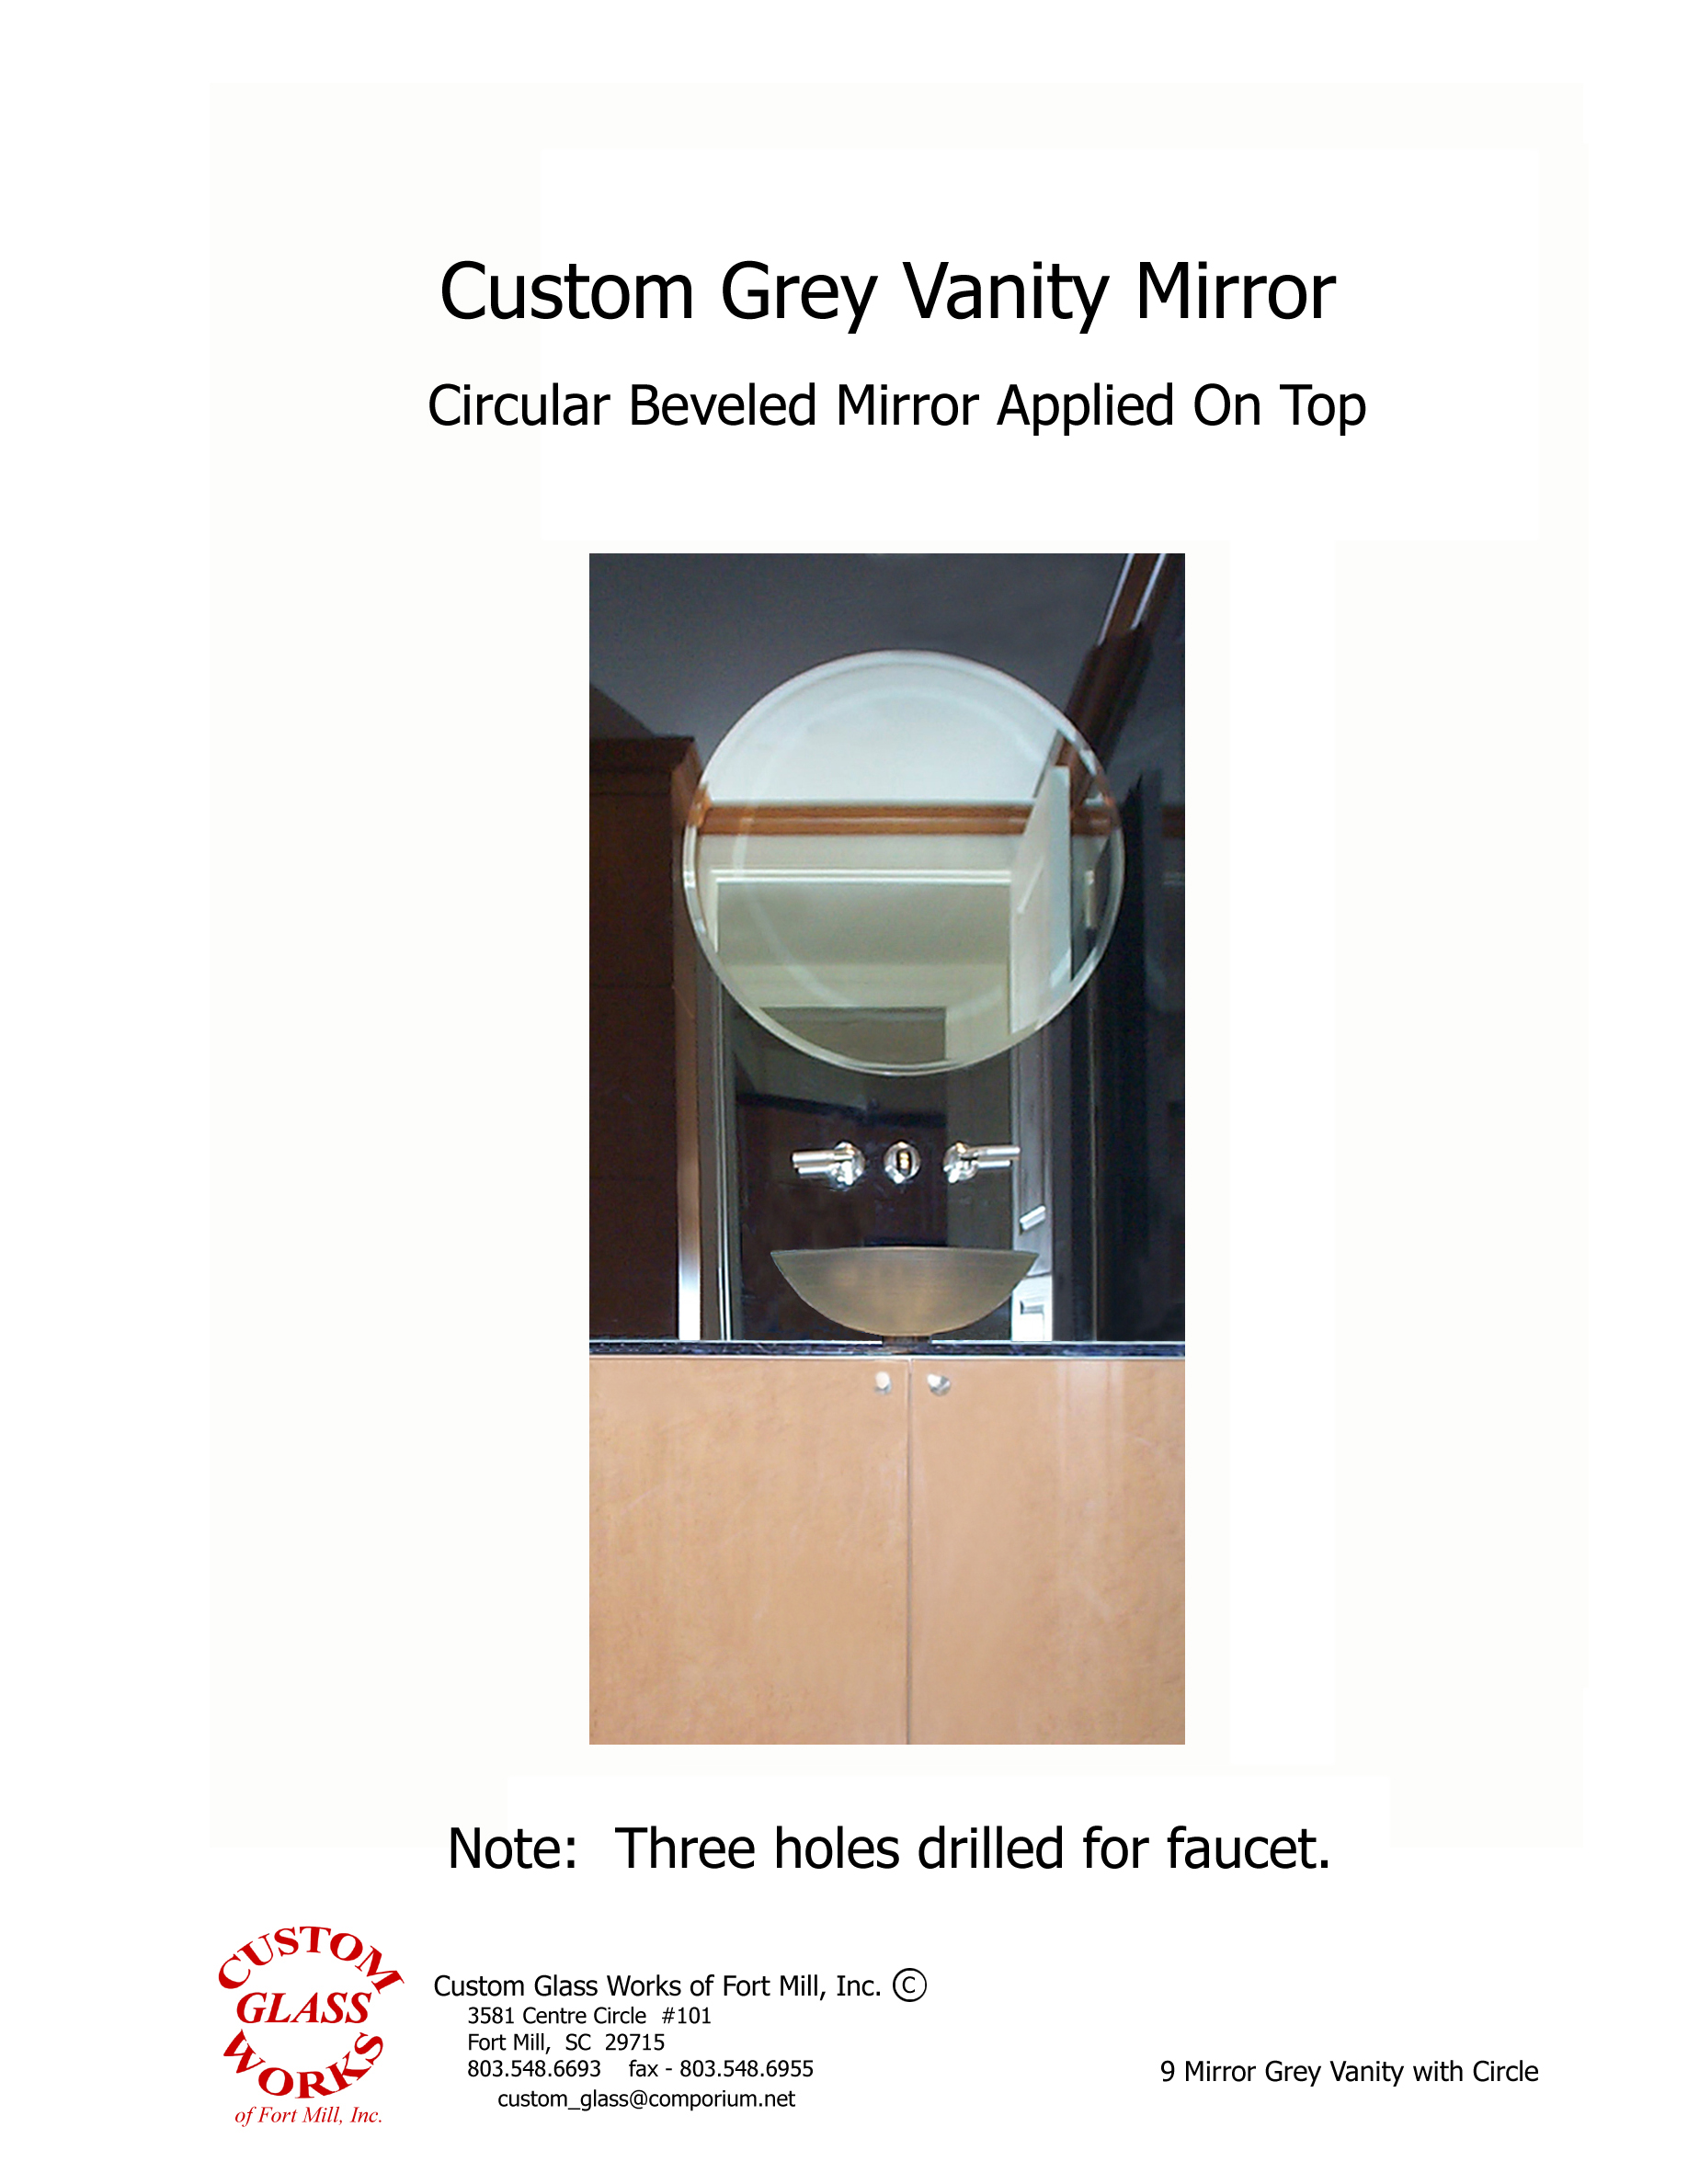 9 Mirror Grey Vanity with Circle